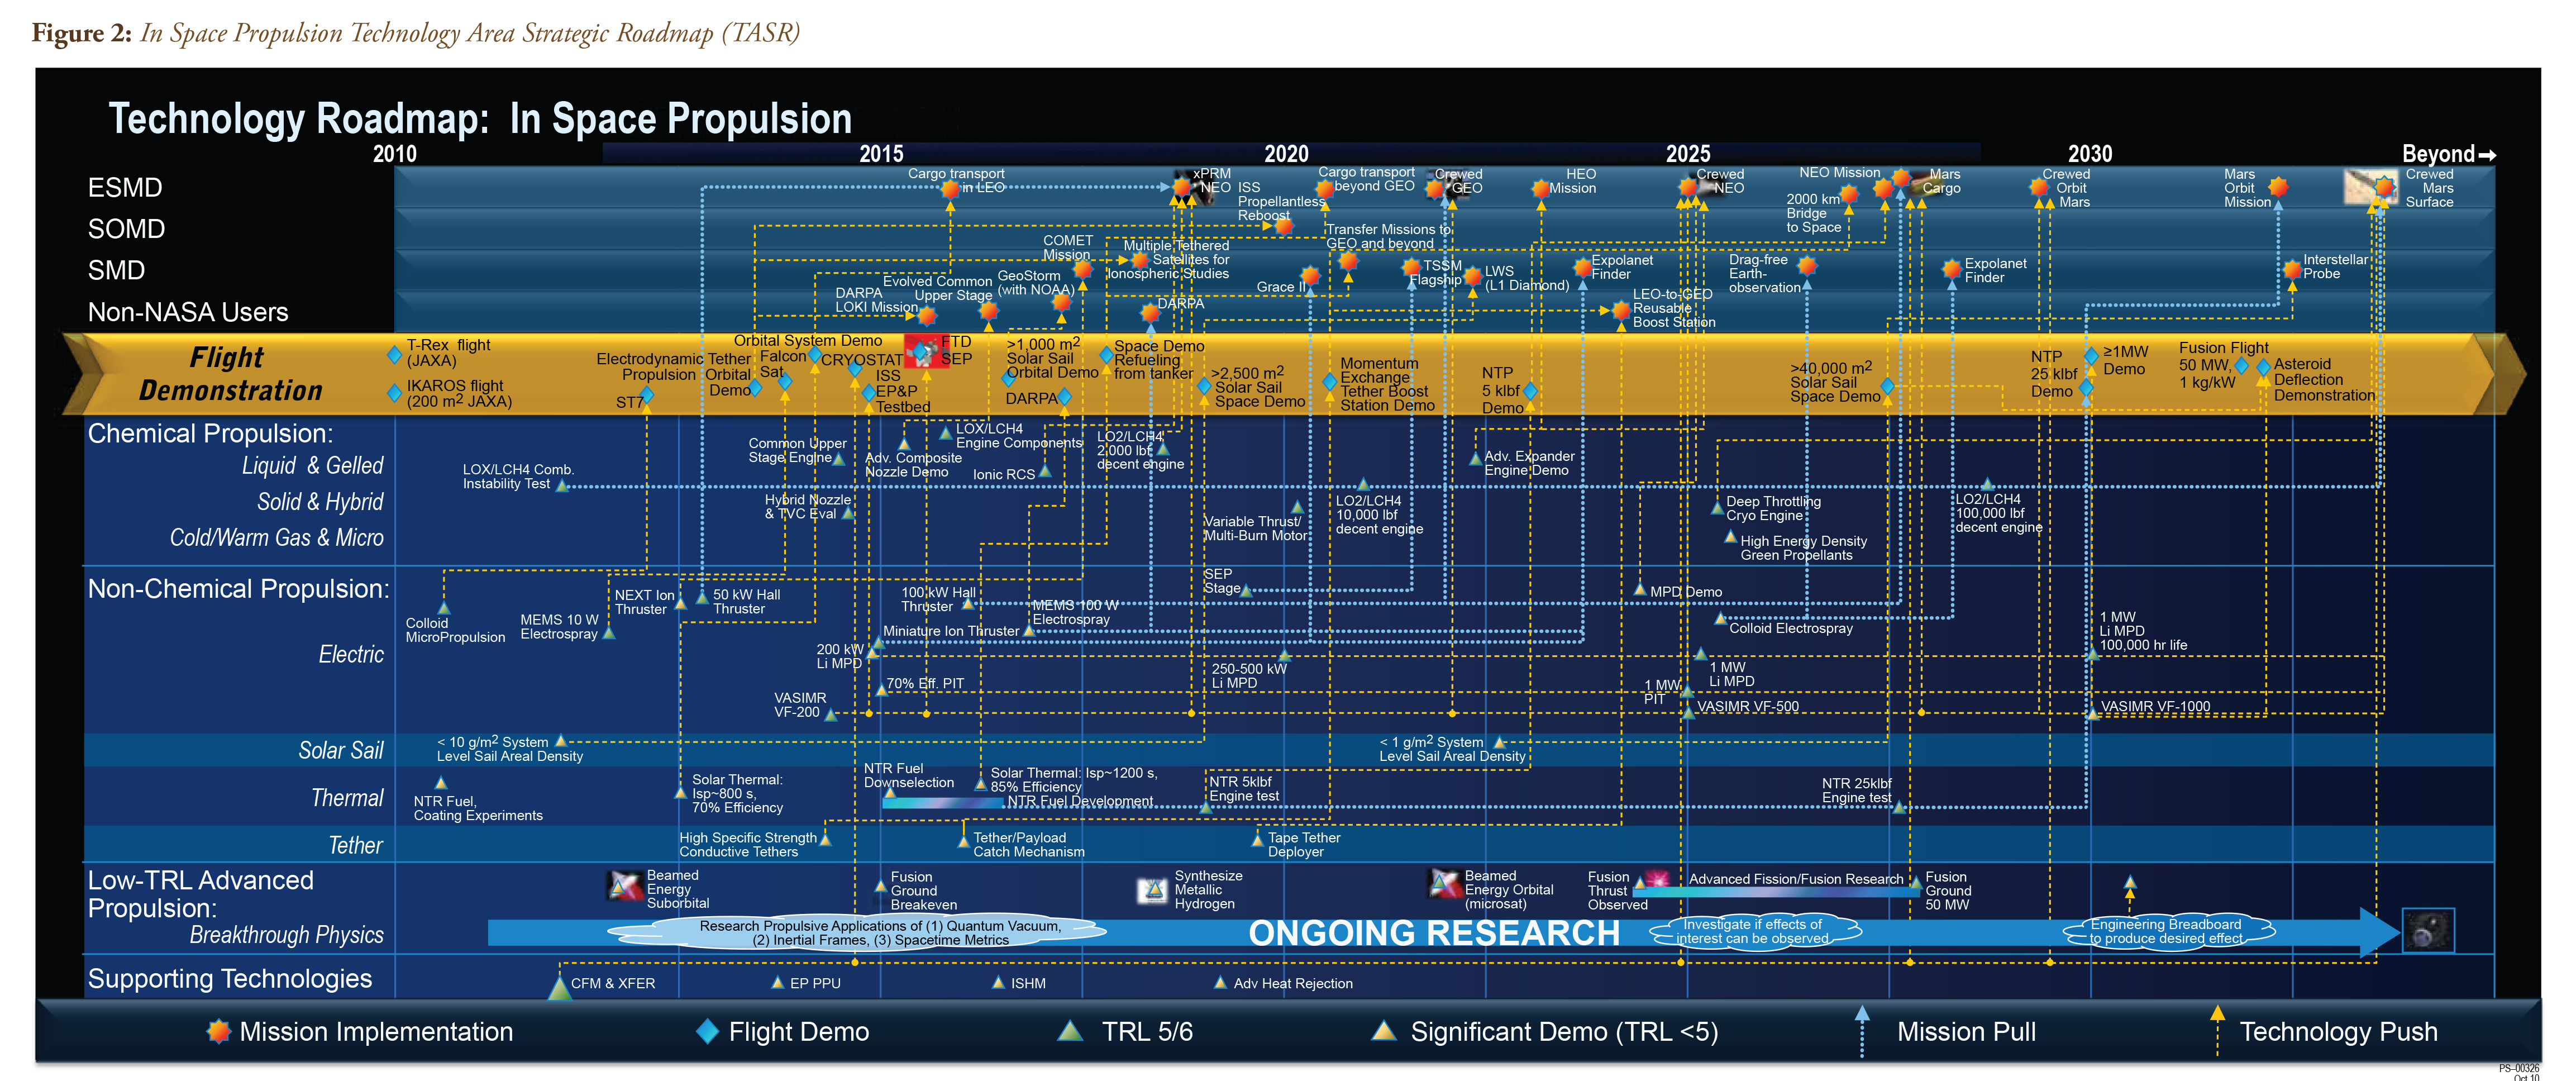 nasa-in-space-propulsion-roadmap-infographic.jpg